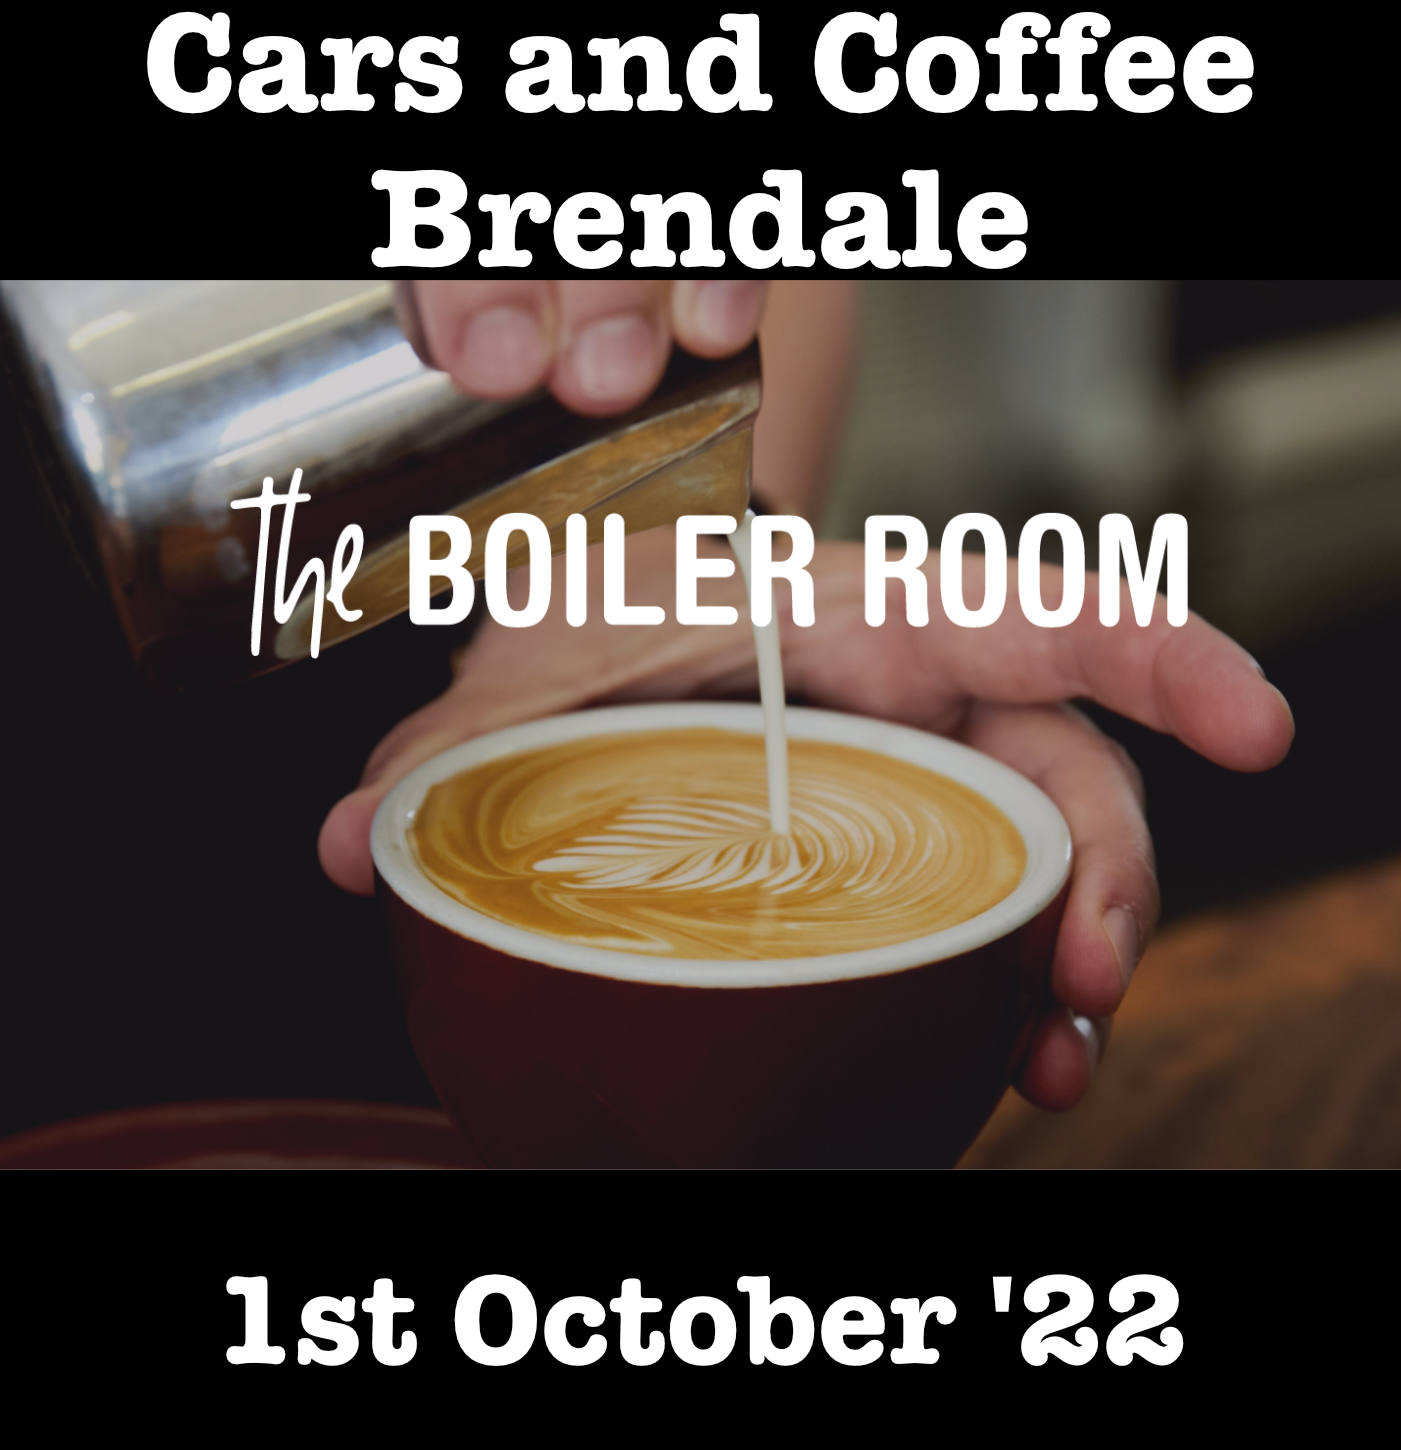 The Boiler Room Cafe